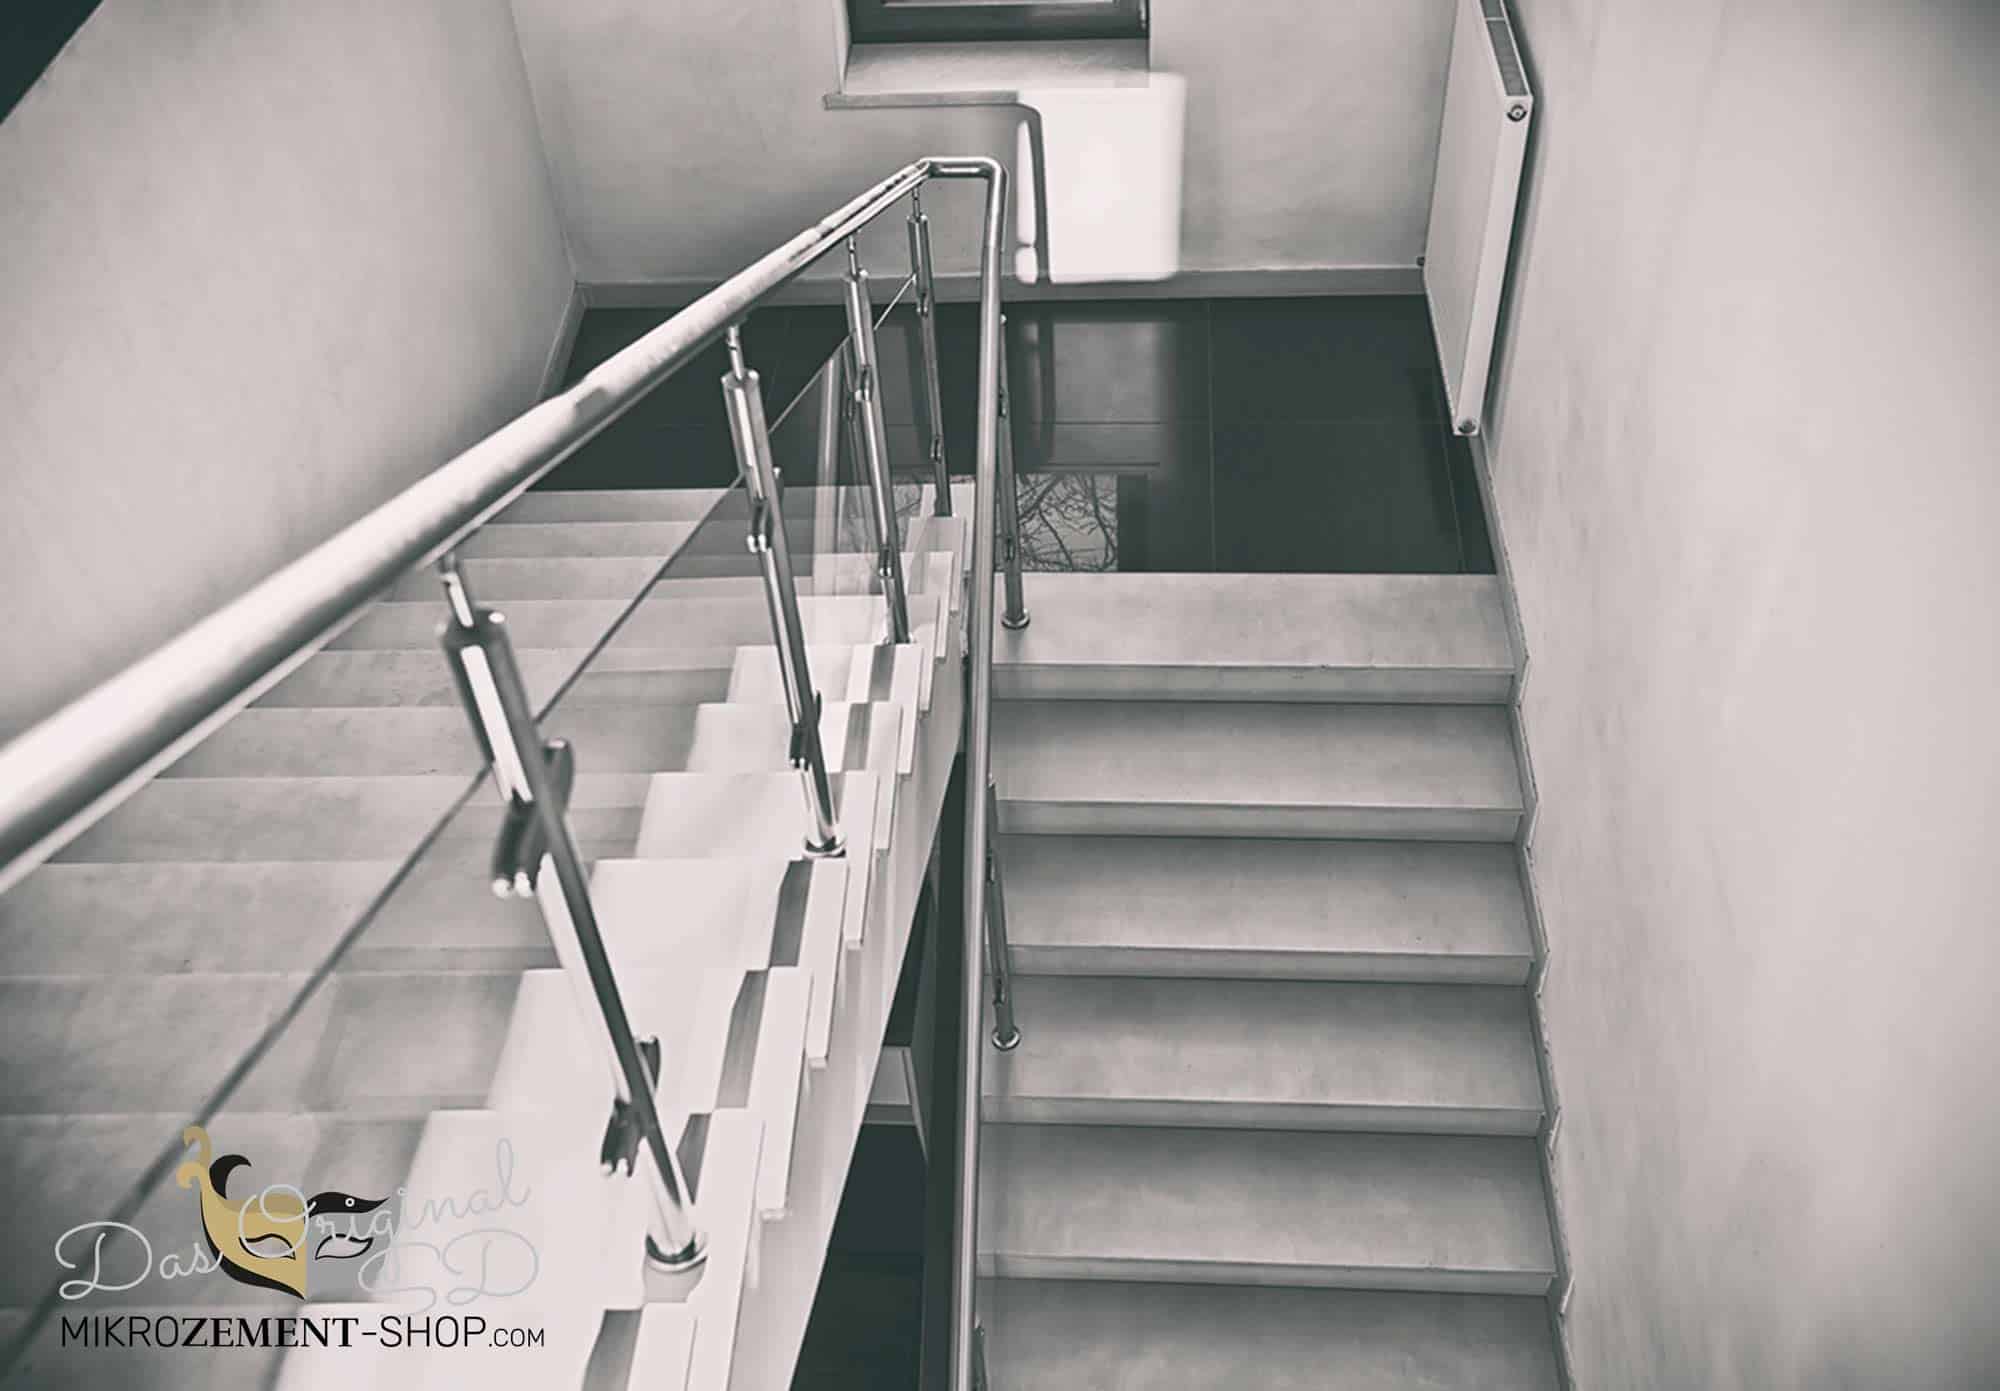 Mikrozement in Treppenhäuser ist extrem stabil